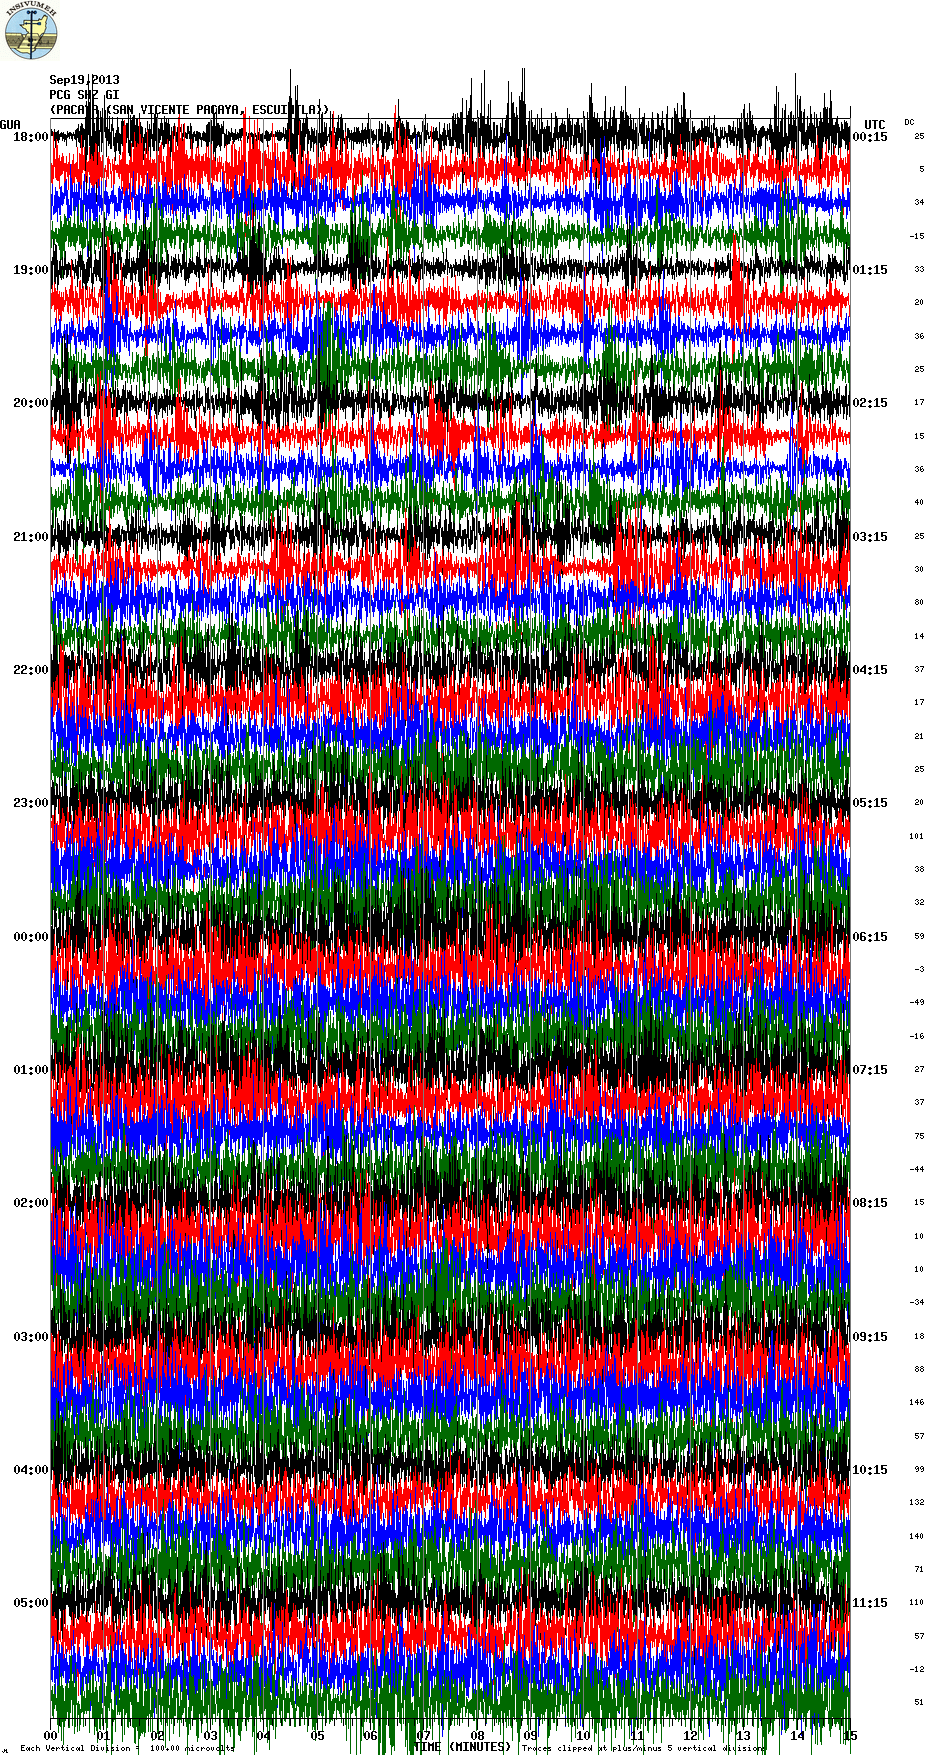 Seismic signal this morning at Pacaya (PCG station, INSIVUMEH)